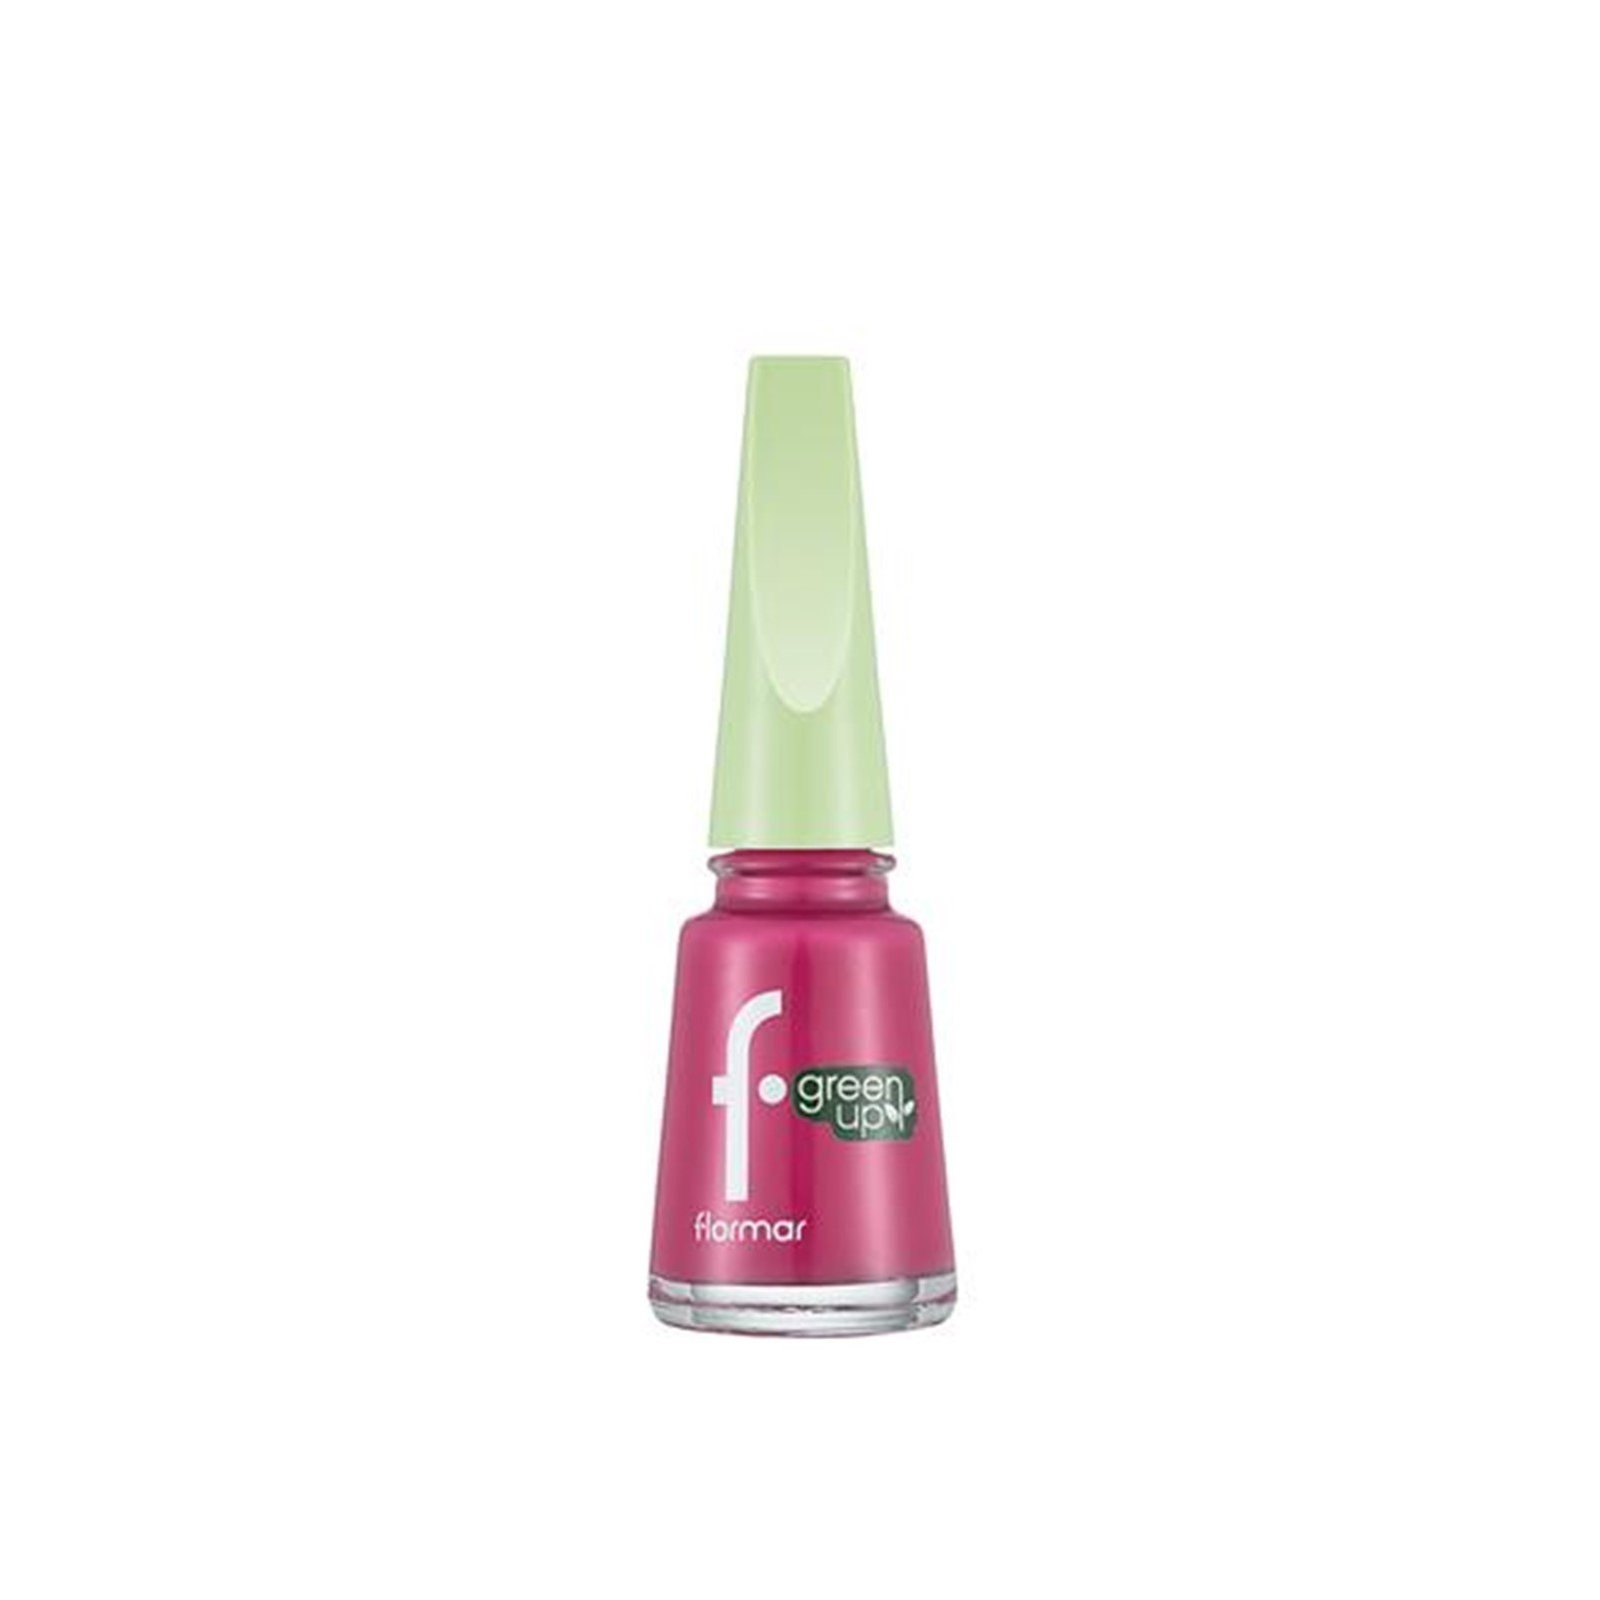 Flormar Green Up Nail Enamel 006 Elegant Pink 11ml (0.37 fl oz)